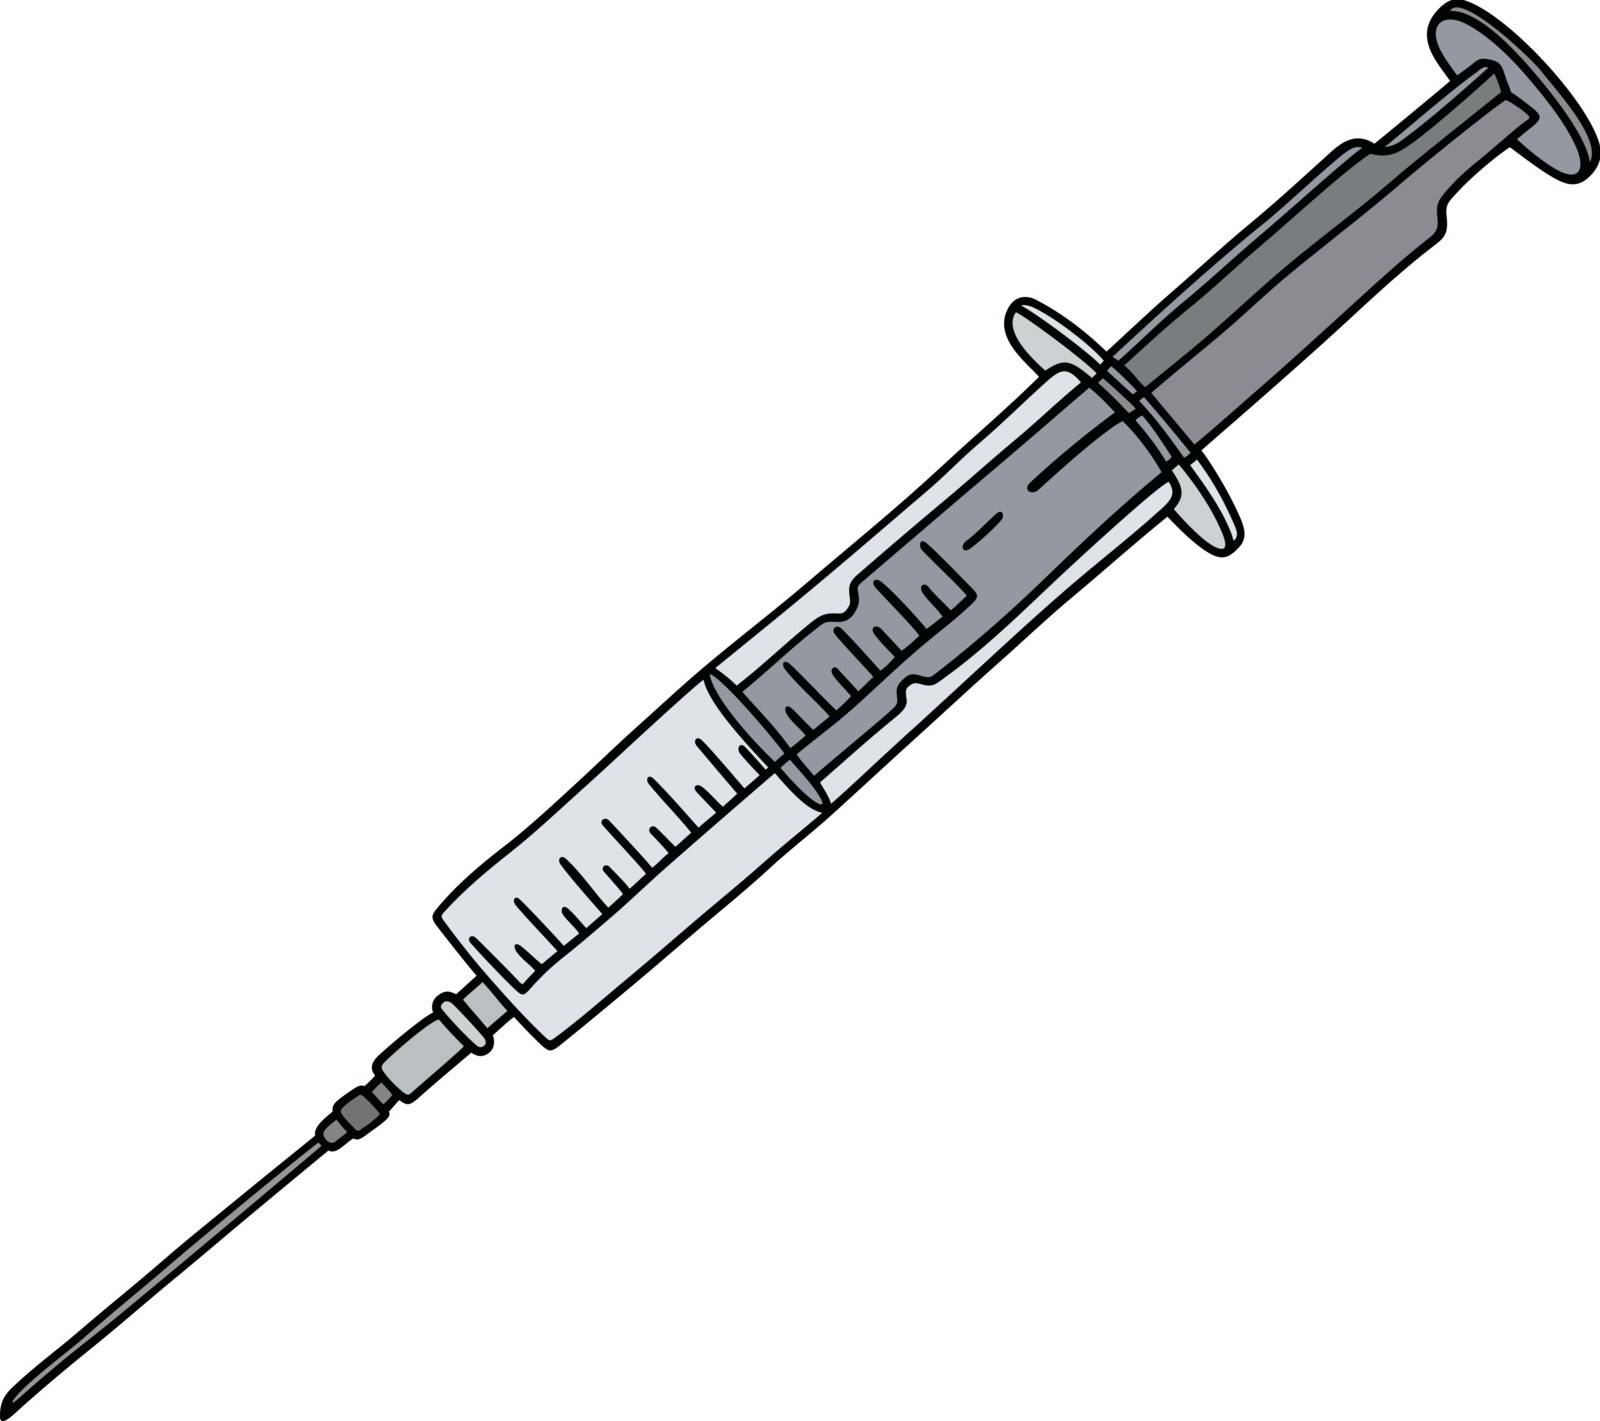 Plastic syringe by vostal